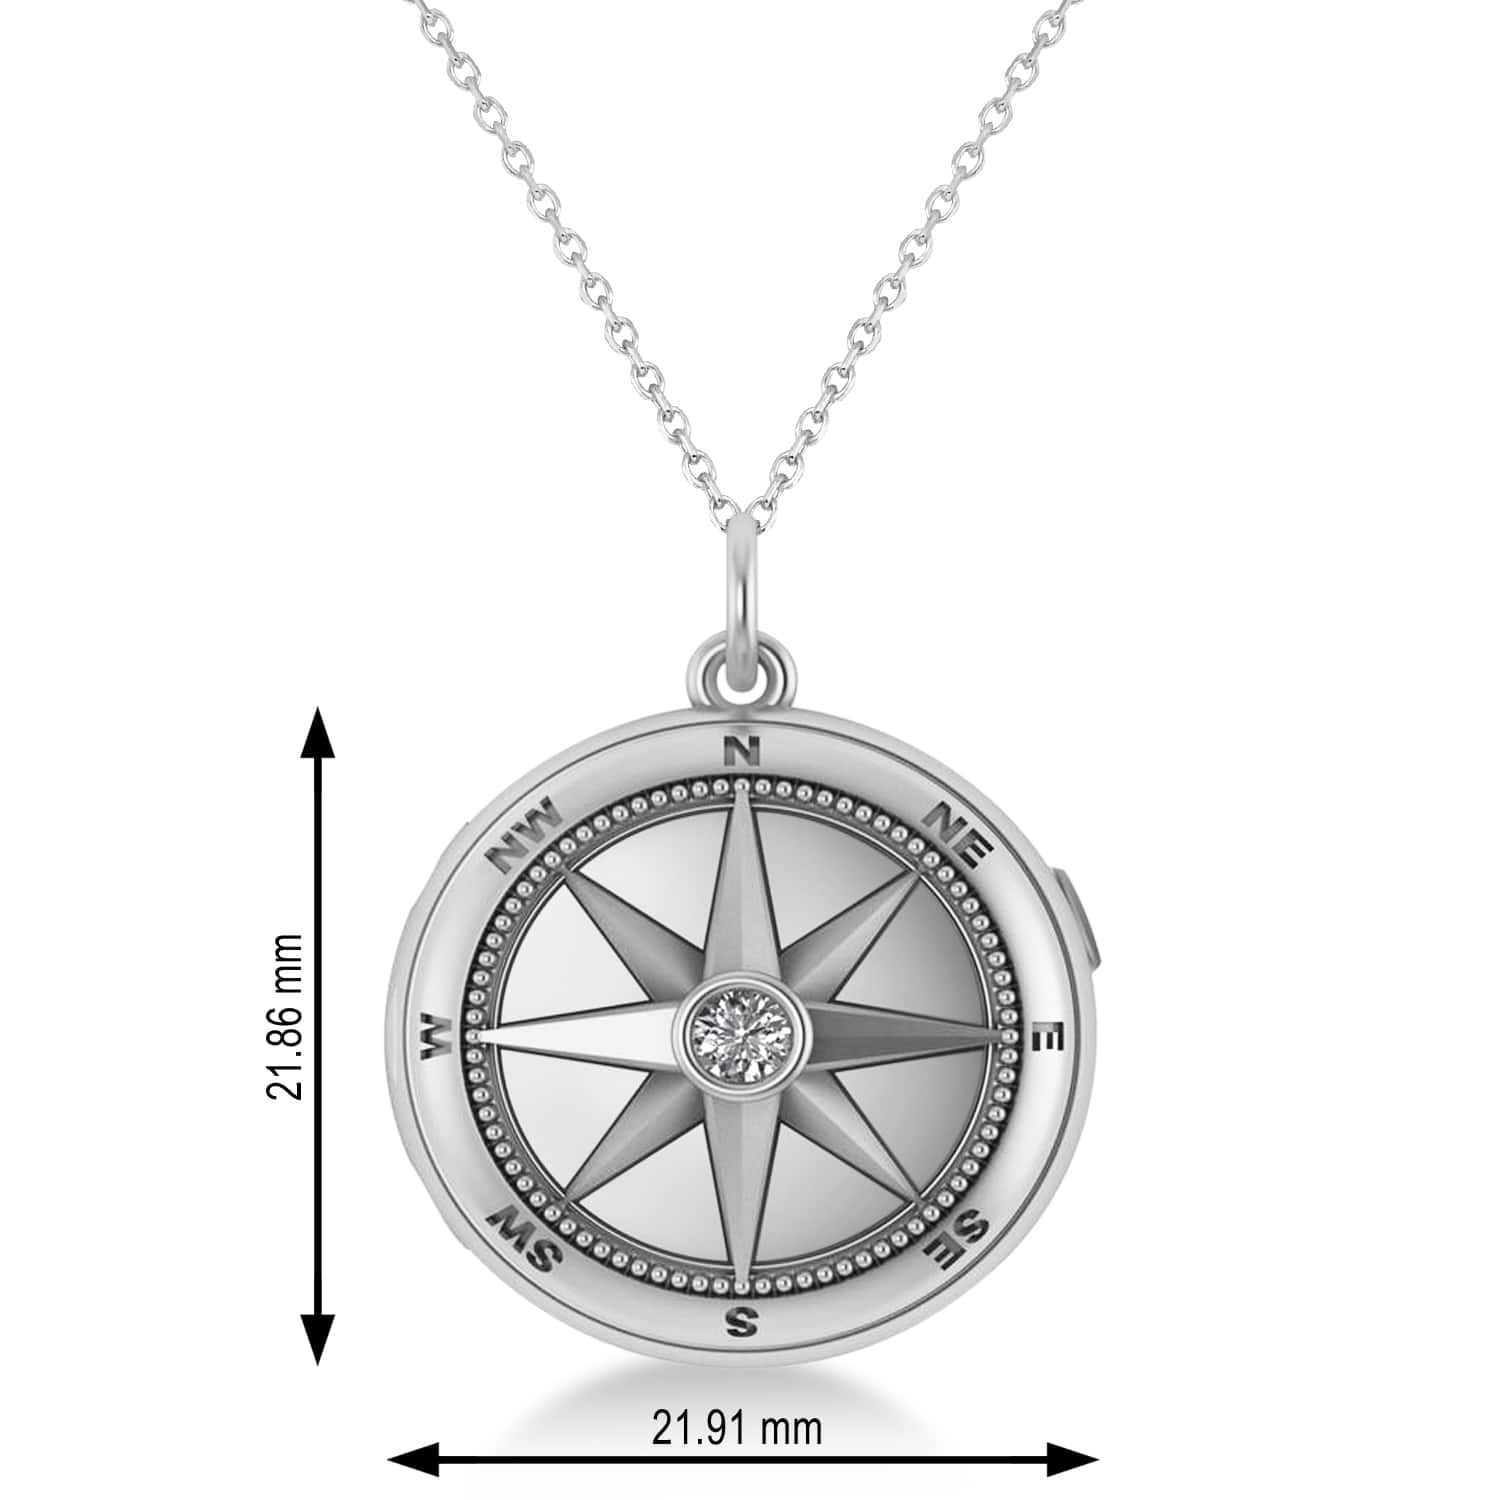 Diamond Compass Locket Necklace 14k White Gold (0.10ct)